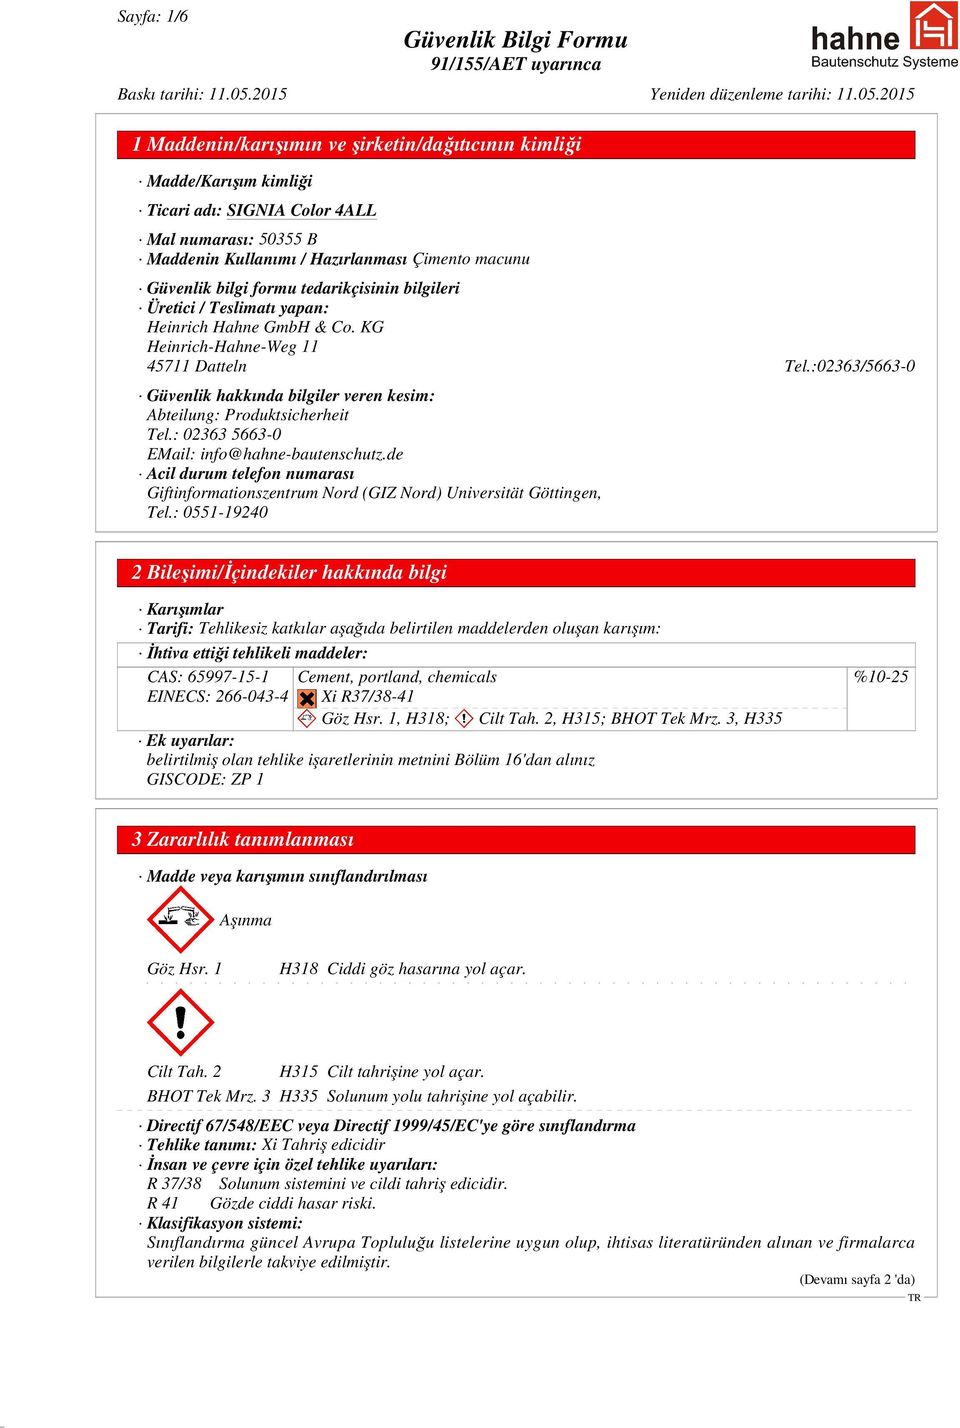 : 02363 5663-0 EMail: info@hahne-bautenschutz.de Acil durum telefon numarası Giftinformationszentrum Nord (GIZ Nord) Universität Göttingen, Tel.